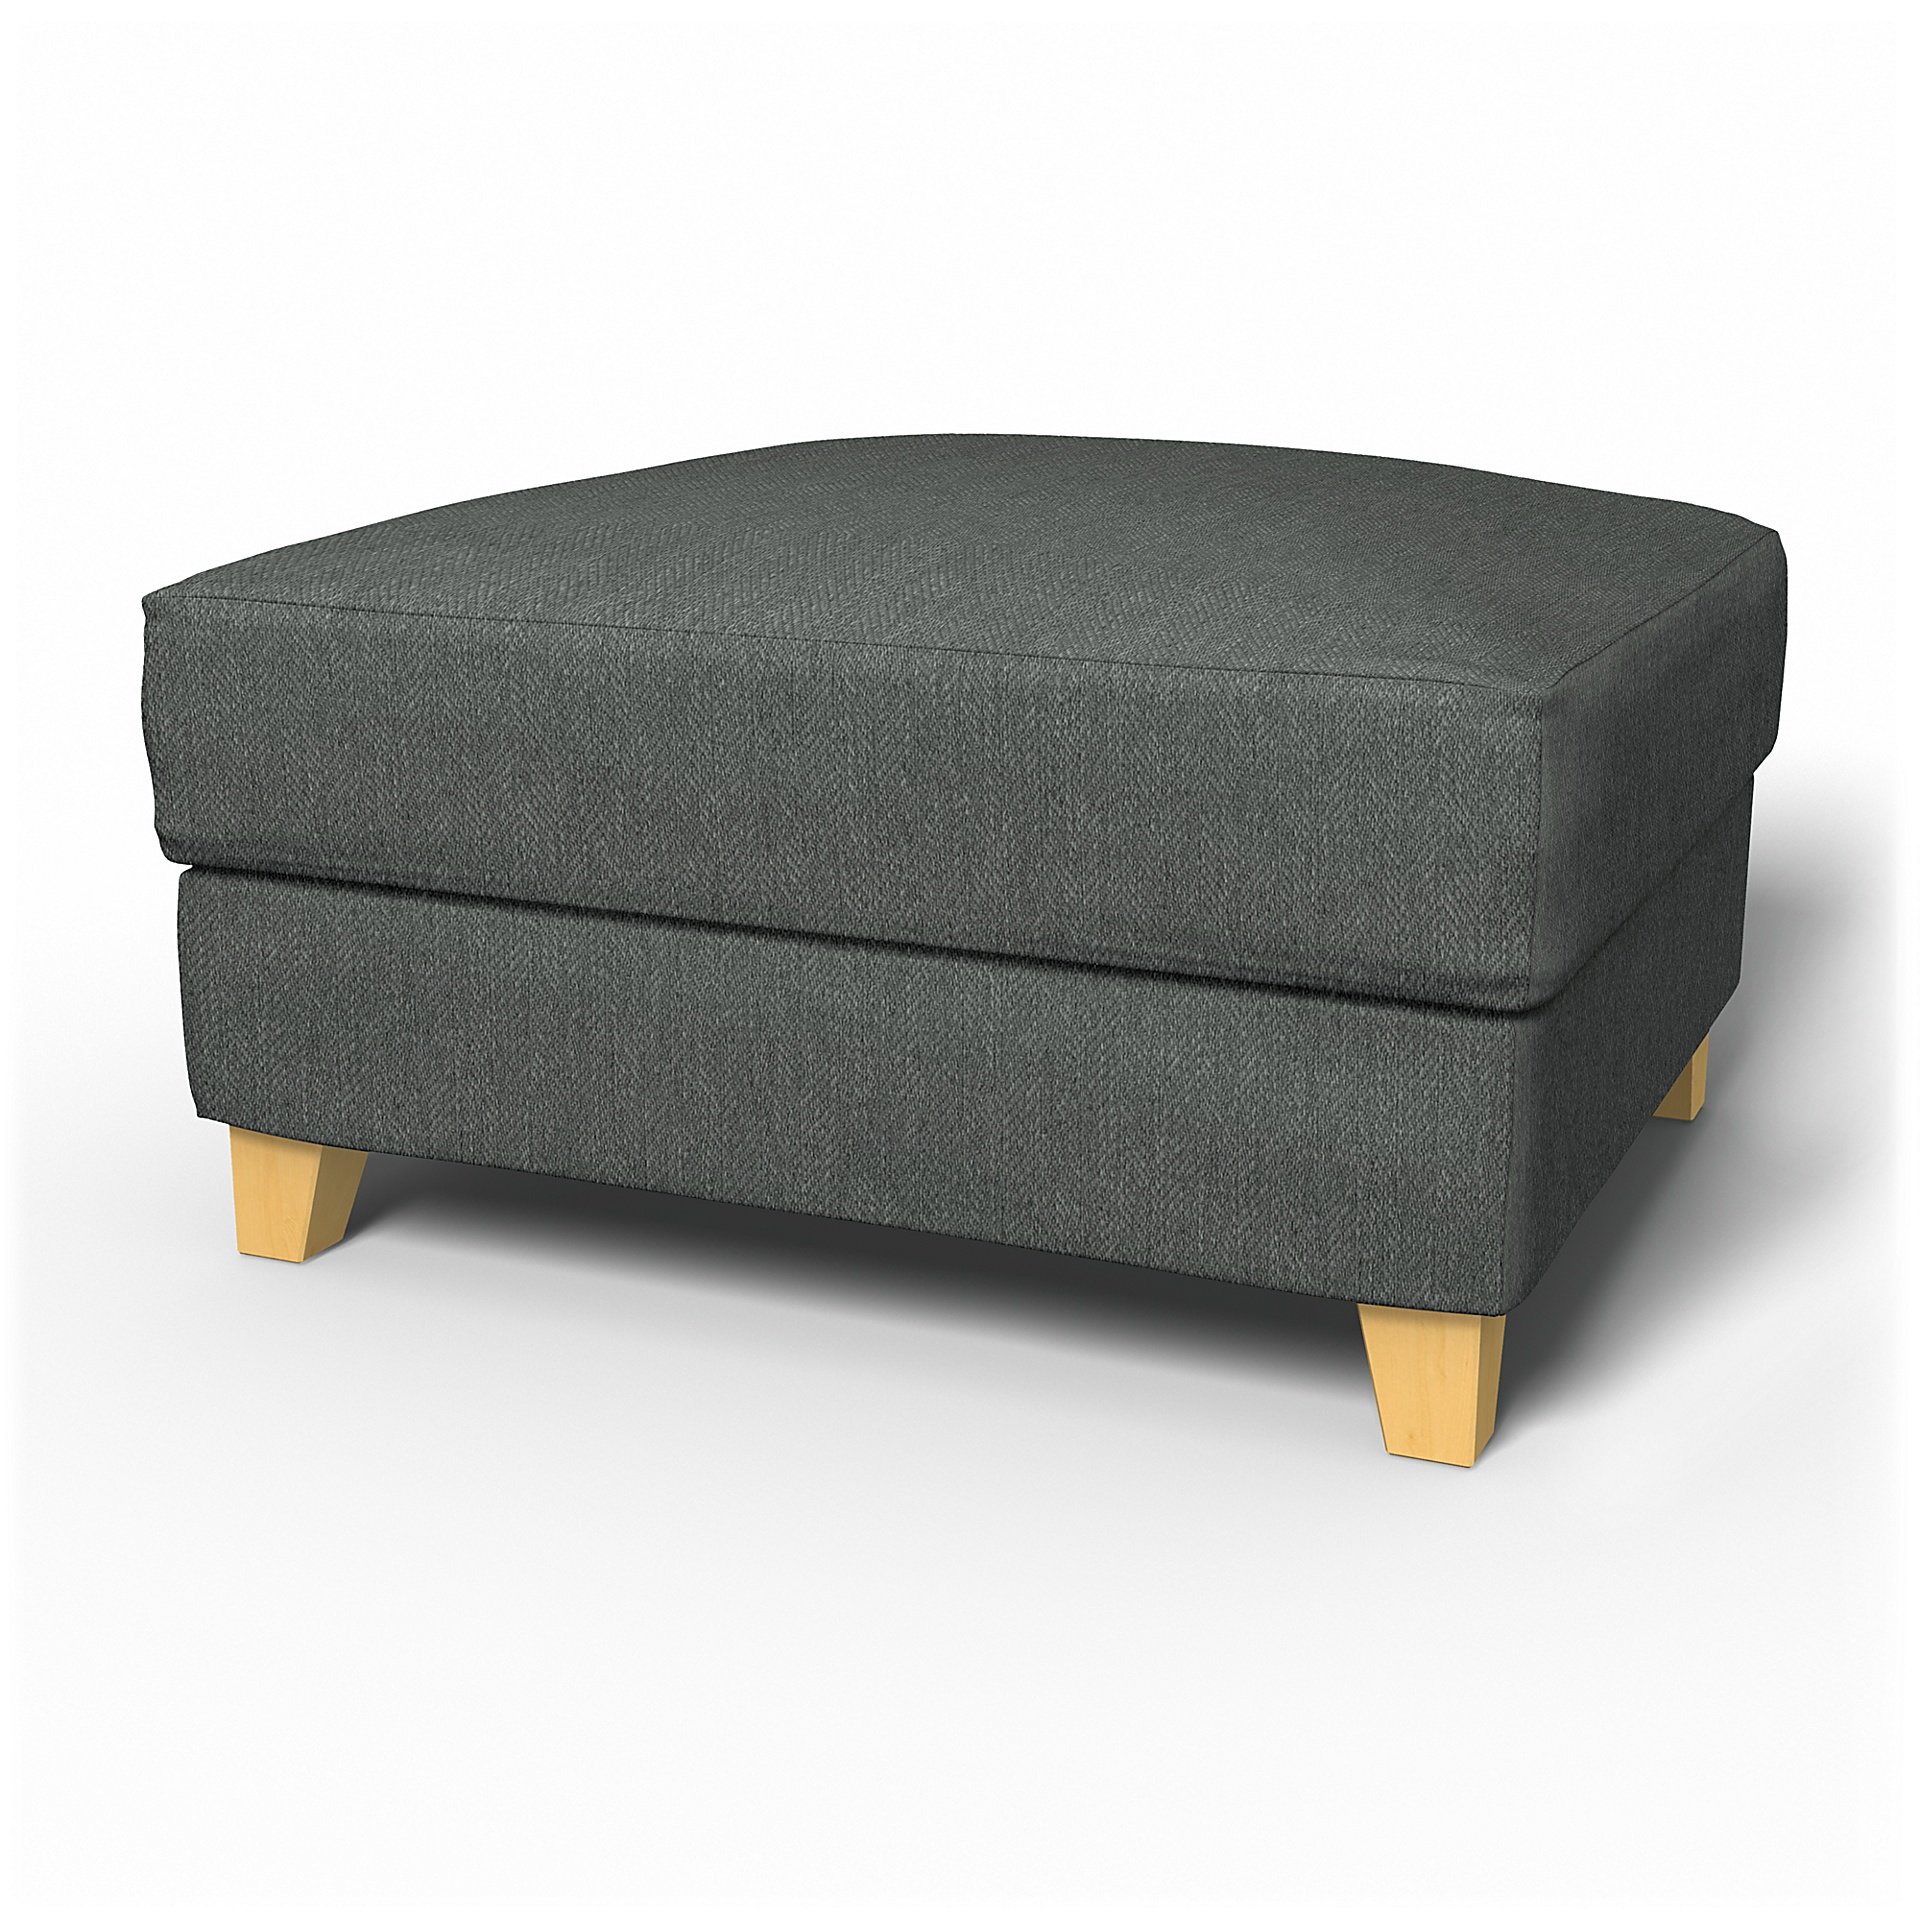 IKEA - Backa Footstool Cover, Laurel, Boucle & Texture - Bemz